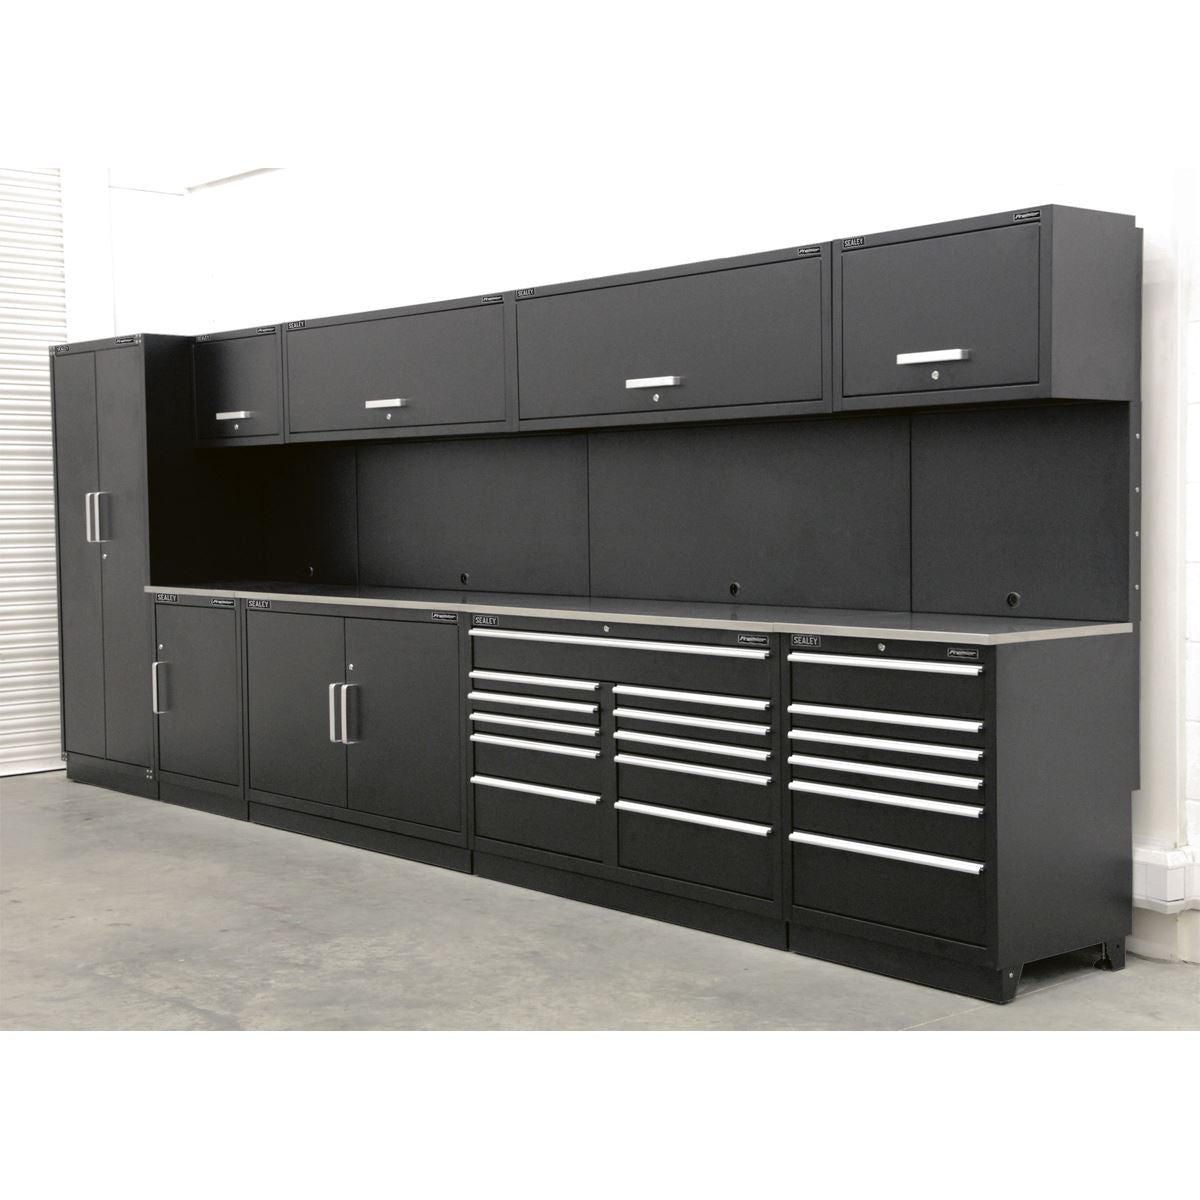 Sealey Premier Premier 5.6m Storage System - Stainless Worktop